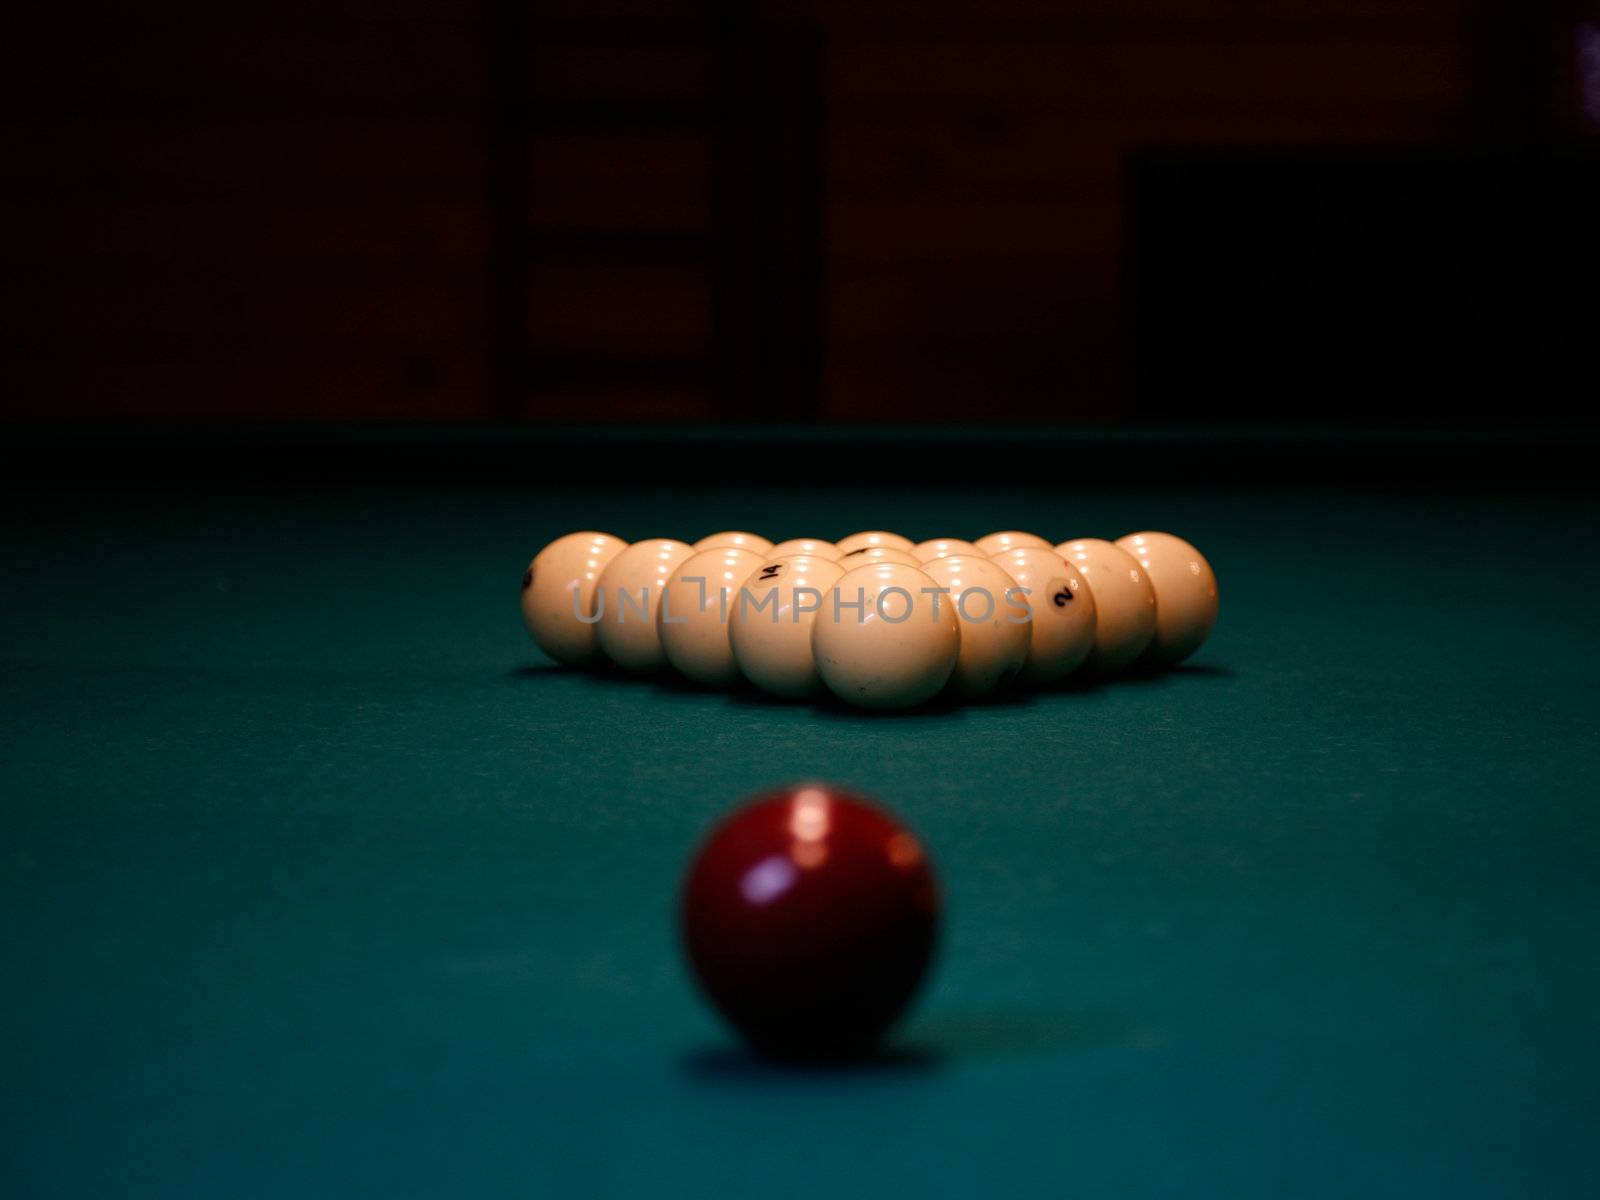 A pool balls by DeusNoxious